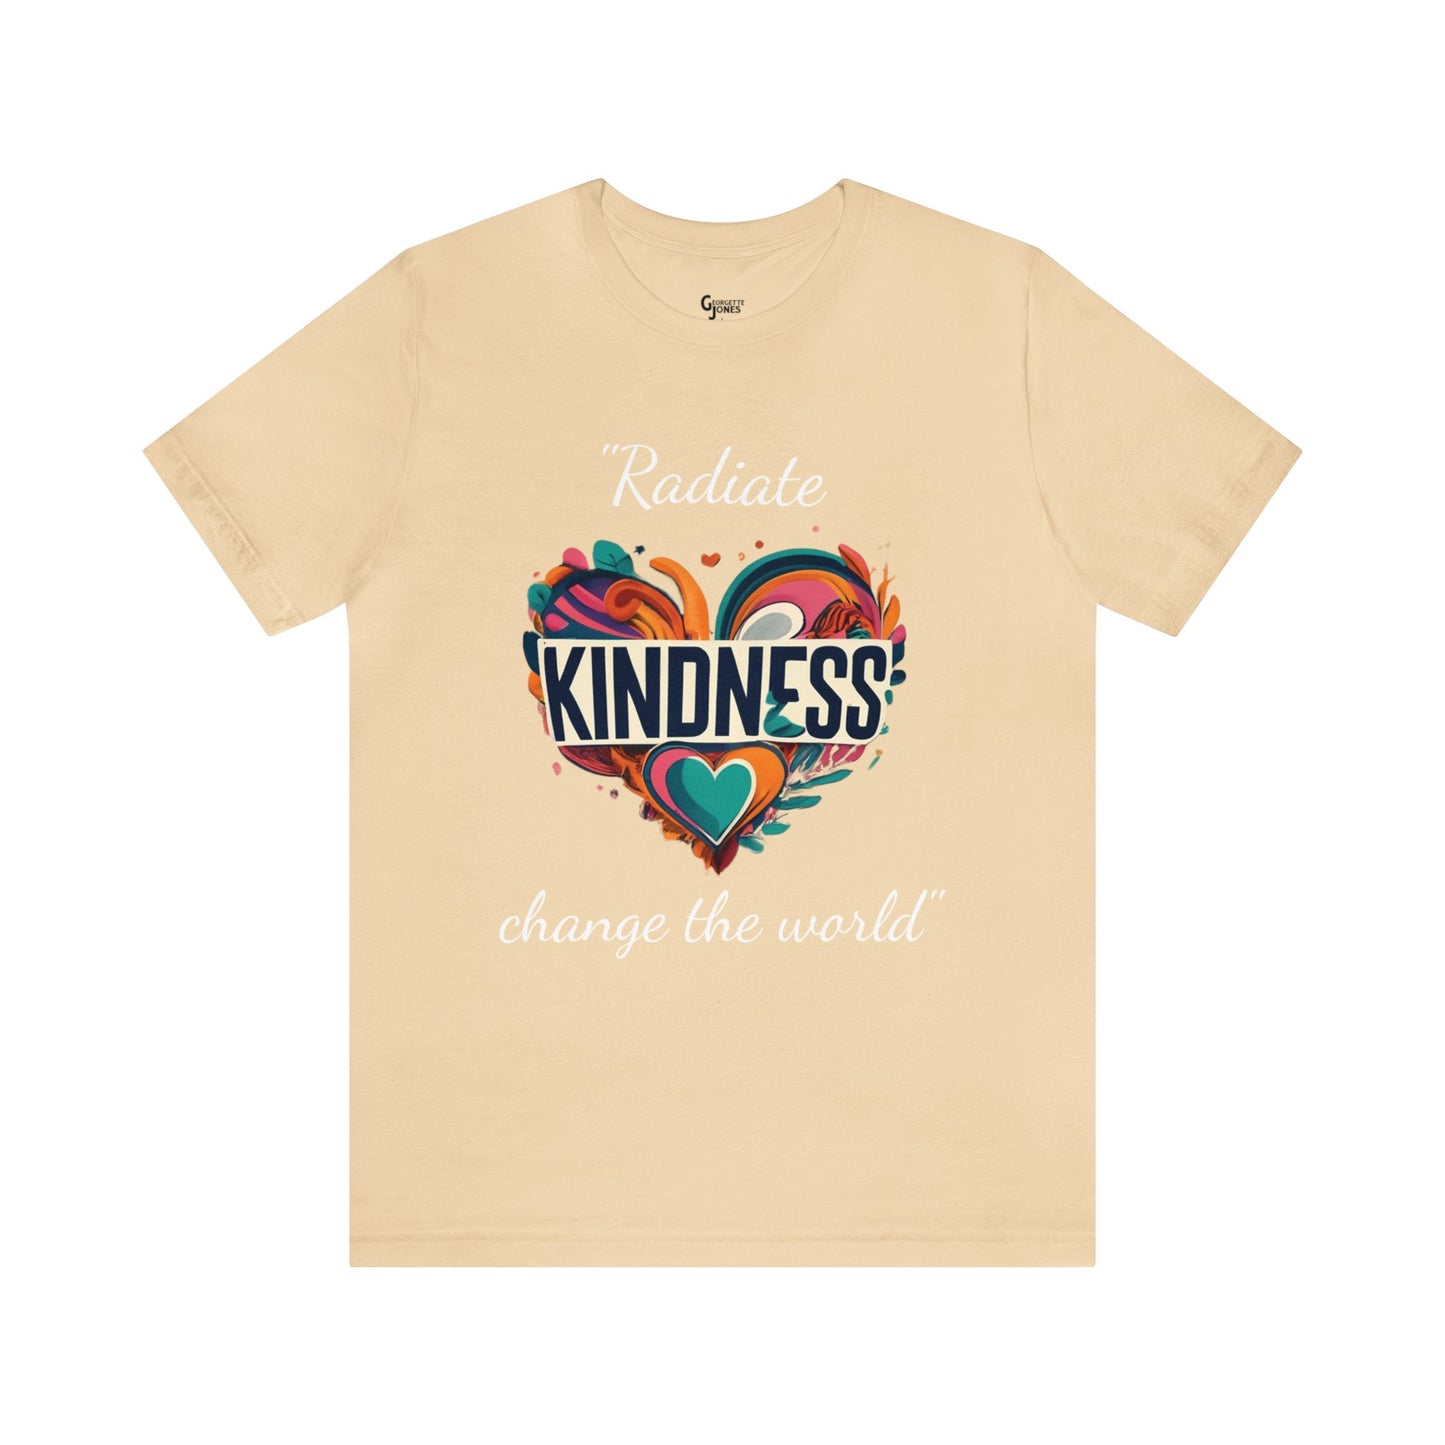 Radiate Kindness, Change the World - Unisex T-shirt